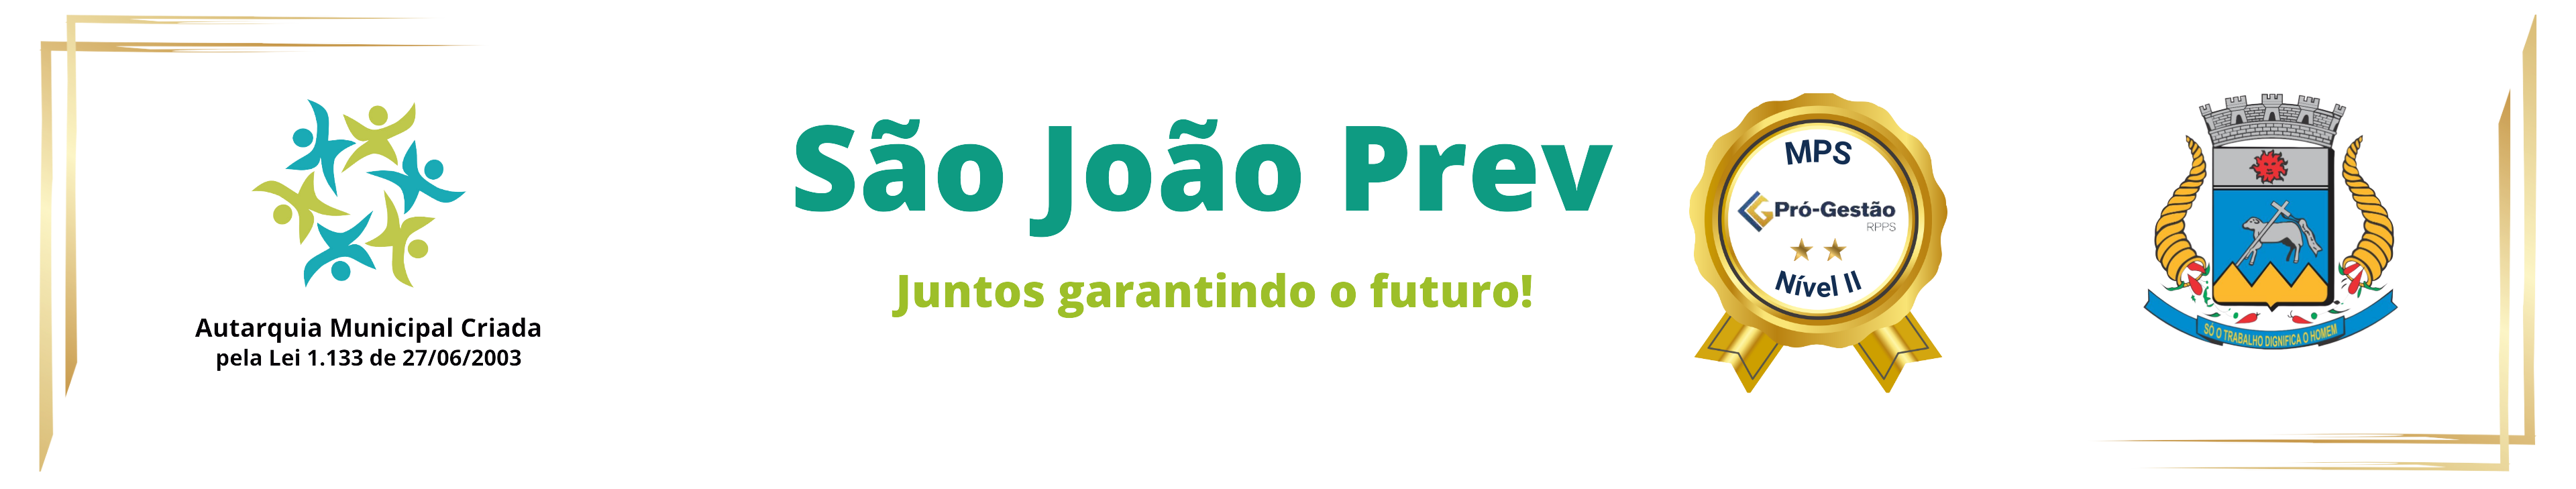 São João Prev